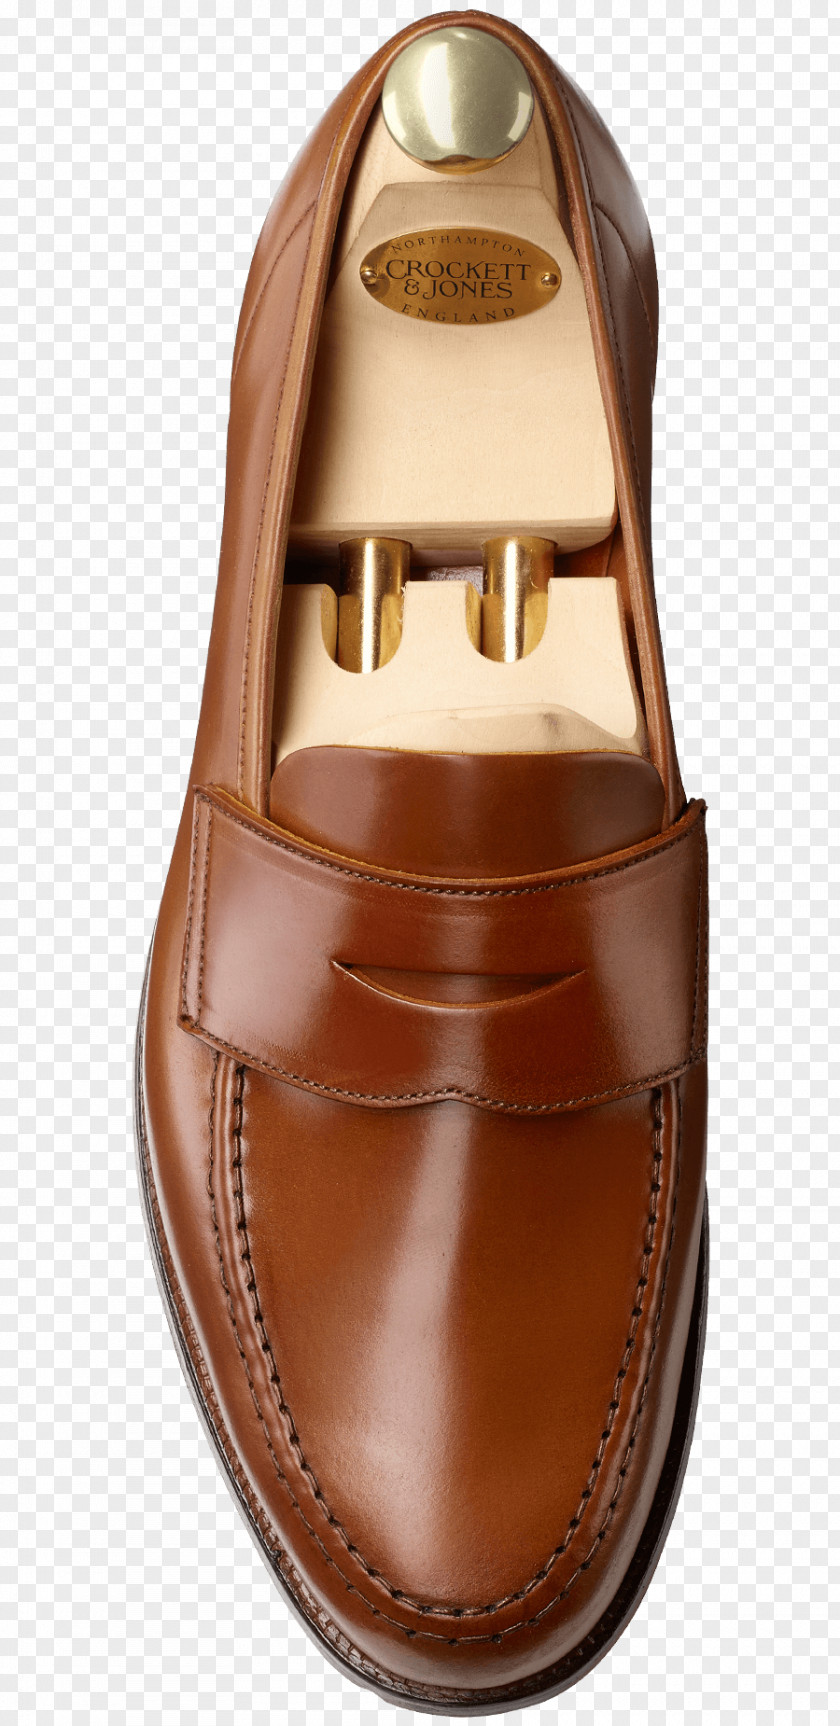 Goodyear Welt Slip-on Shoe Leather Shell Cordovan Crockett & Jones PNG